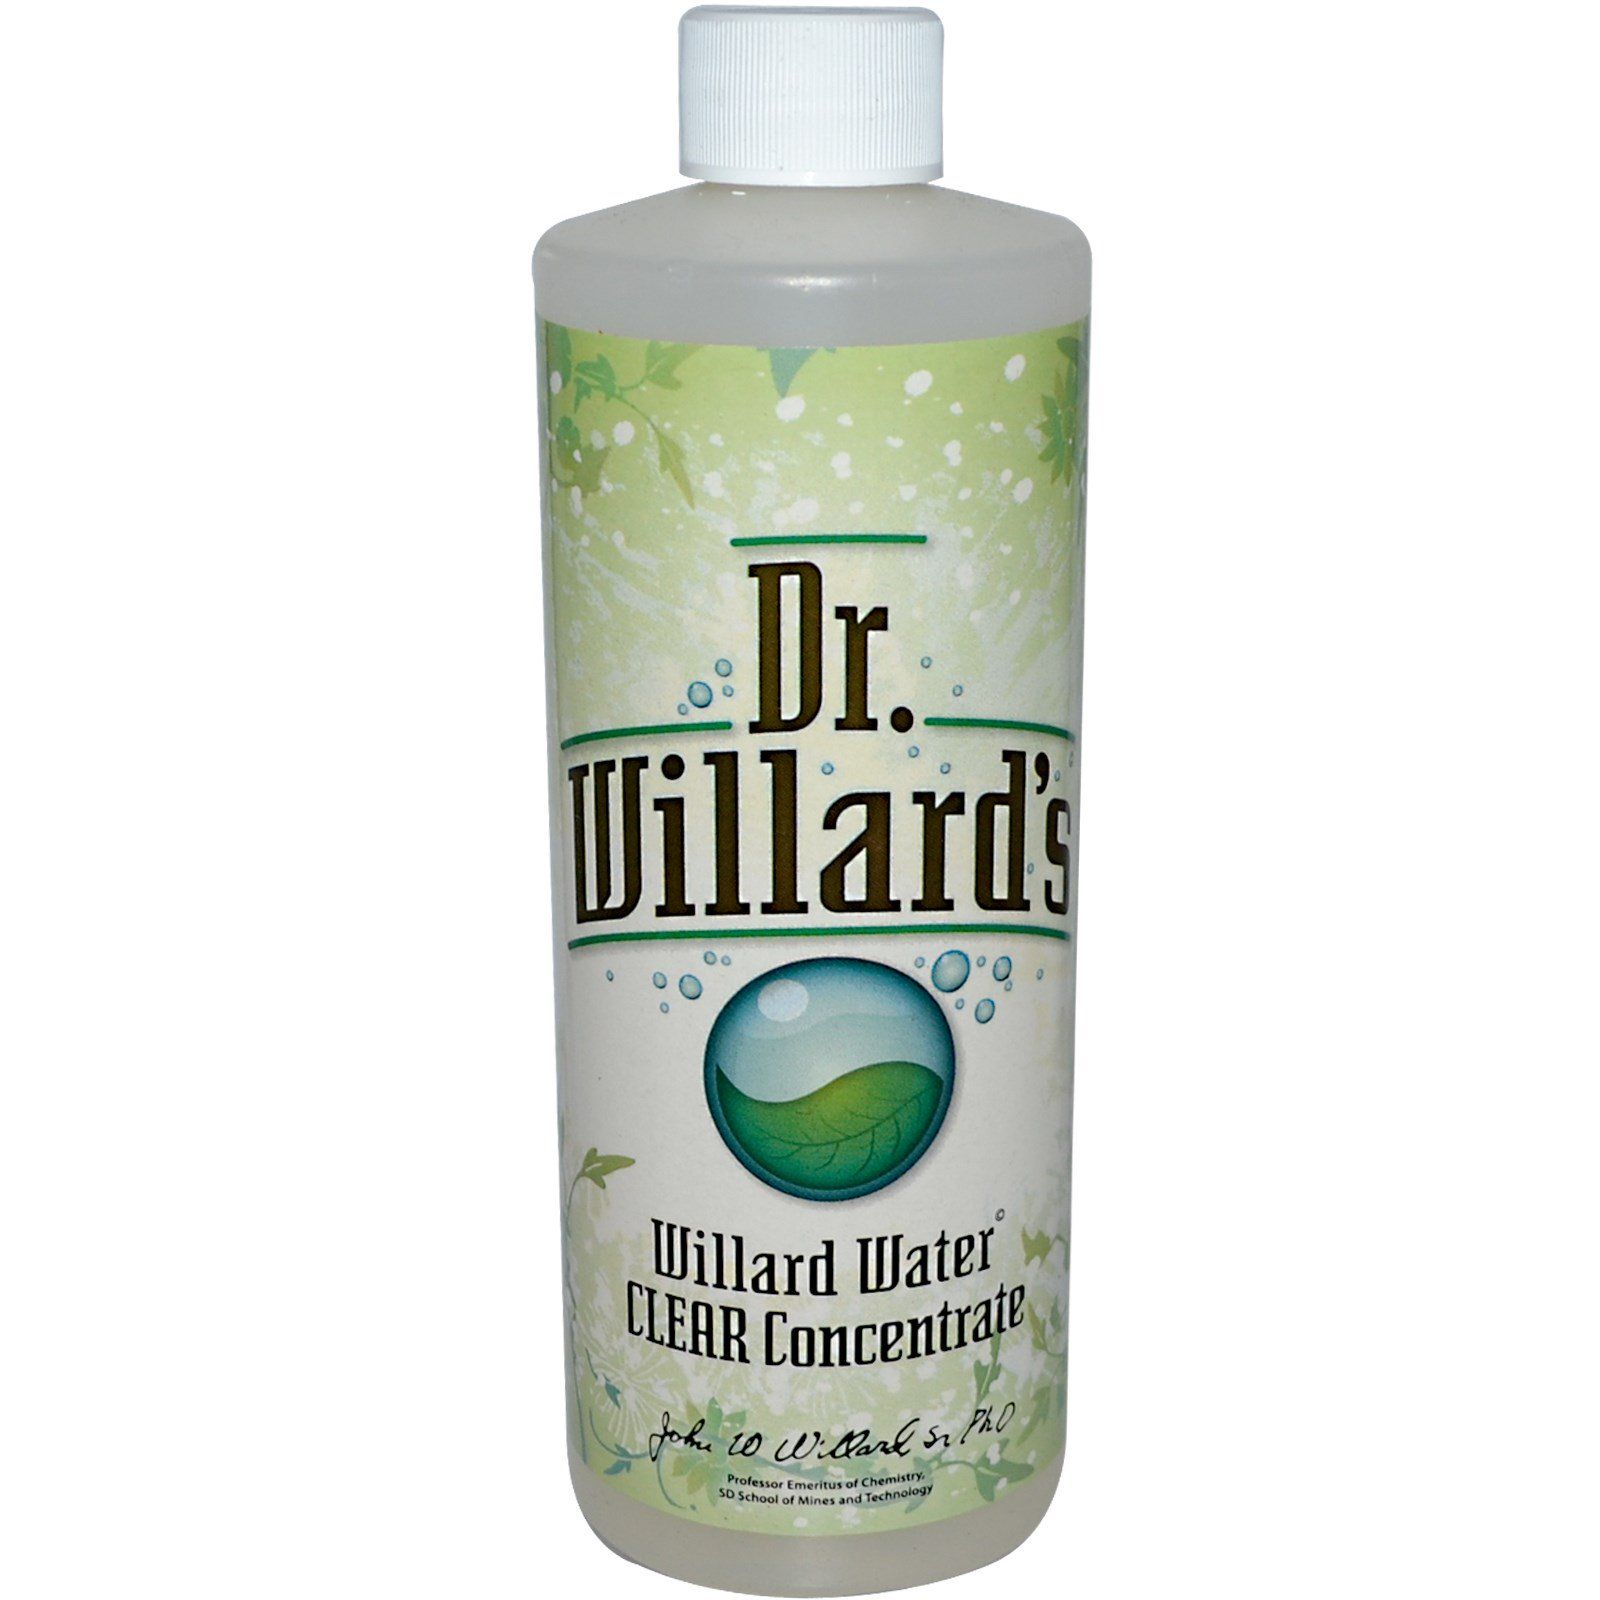 Willard Водный очищающий концентрат Уилларда 16 унций (0.473 л) verdi falstaff willard white